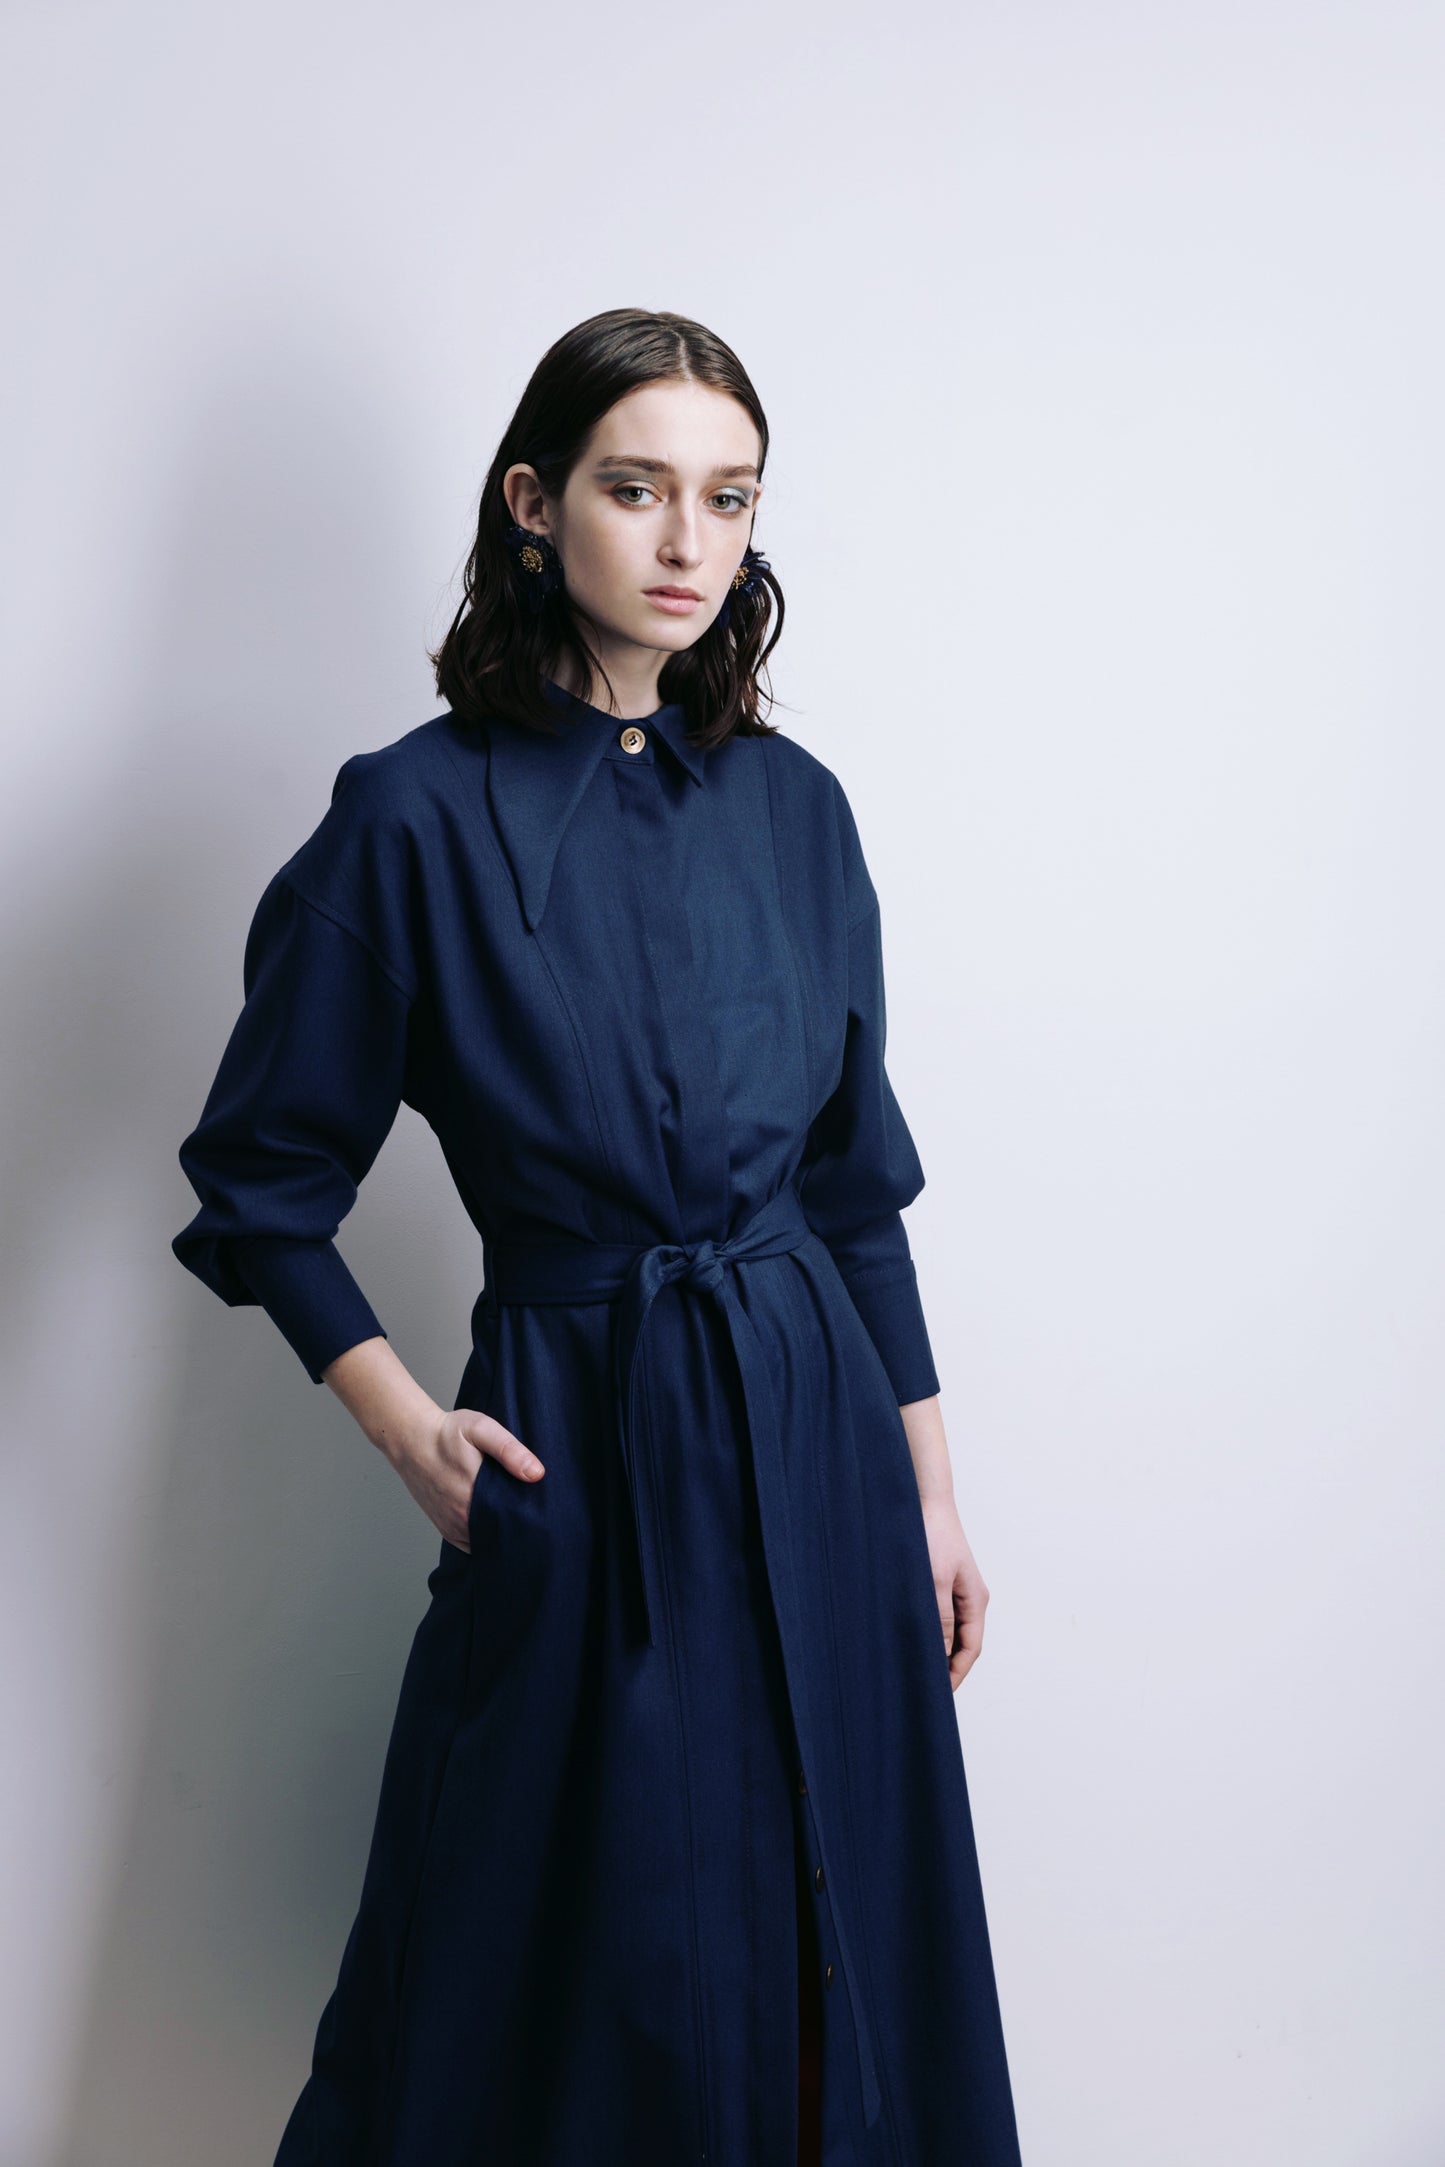 Elegant Dress Shirt Ankle Length Wool-Blend Blue